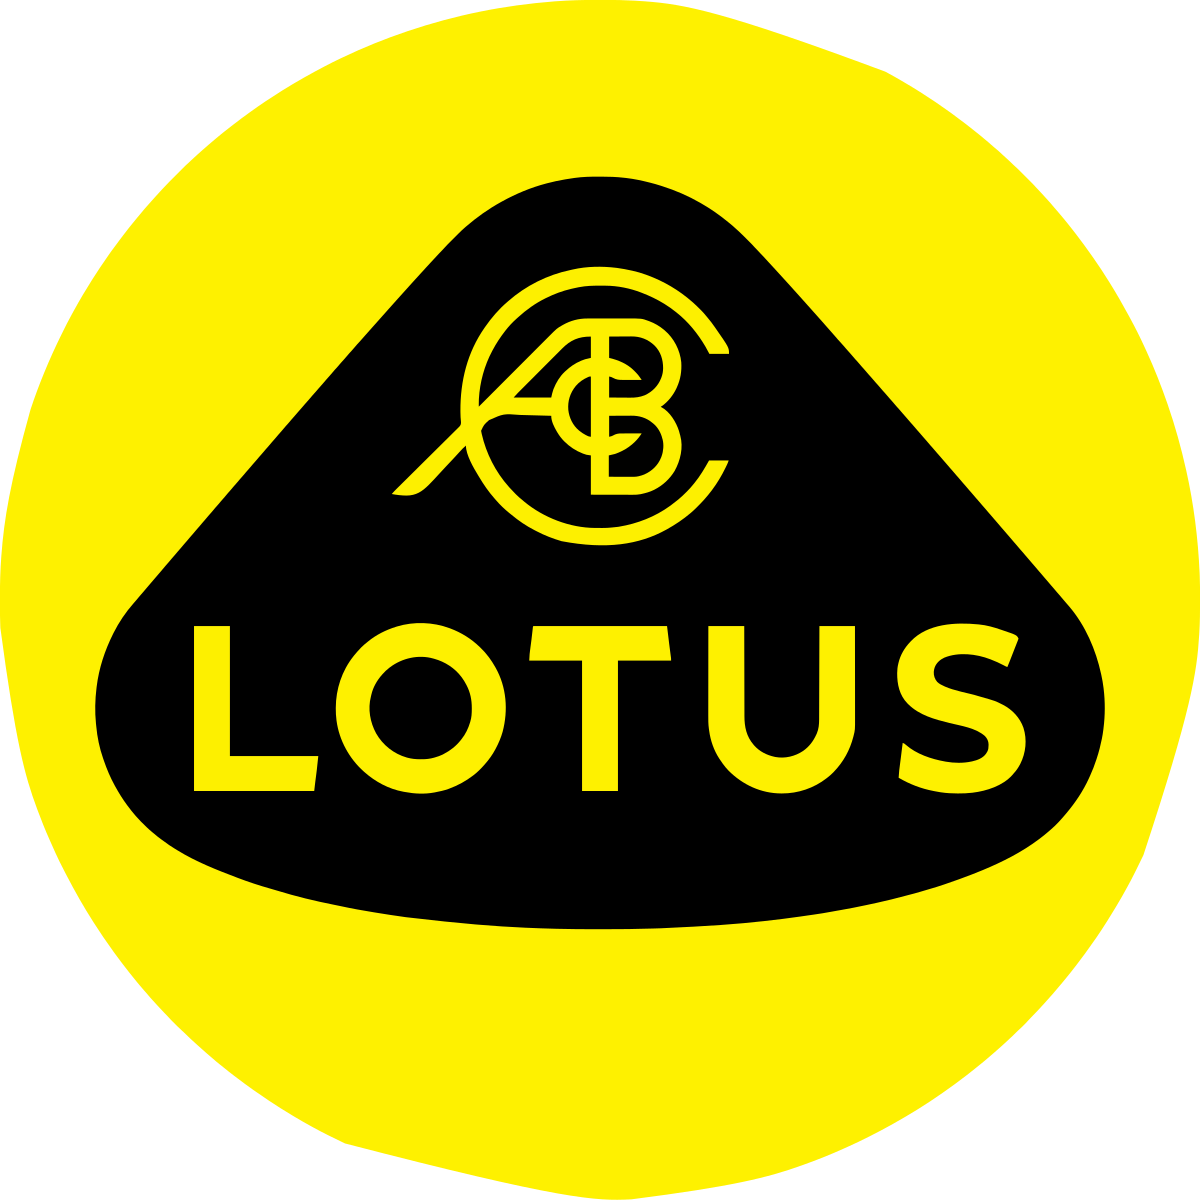 Lotus Cars - Wikipedia